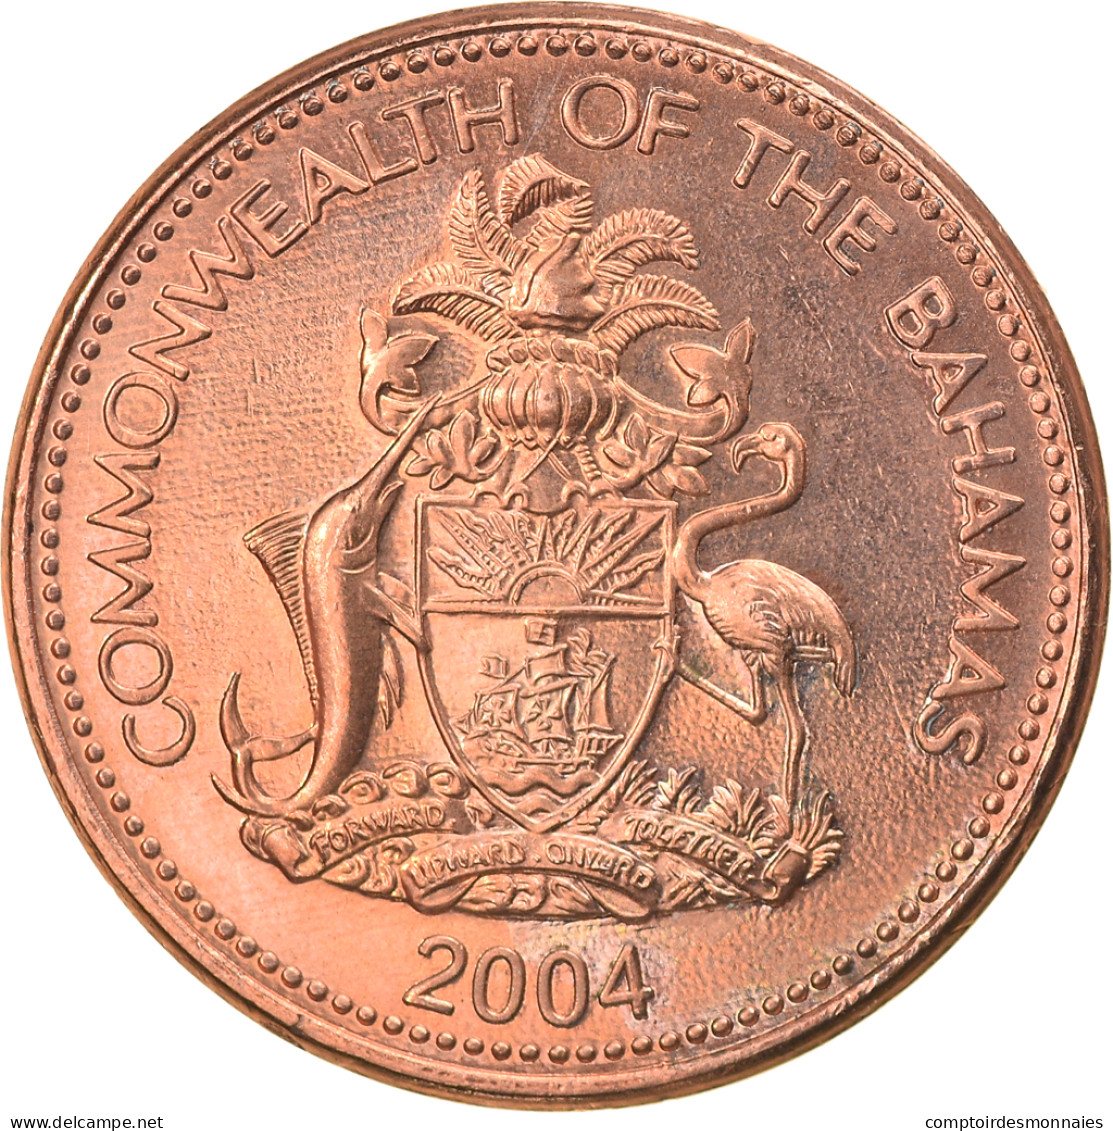 Monnaie, Bahamas, Elizabeth II, Cent, 2004, SUP, Copper Plated Zinc, KM:59a - Bahama's